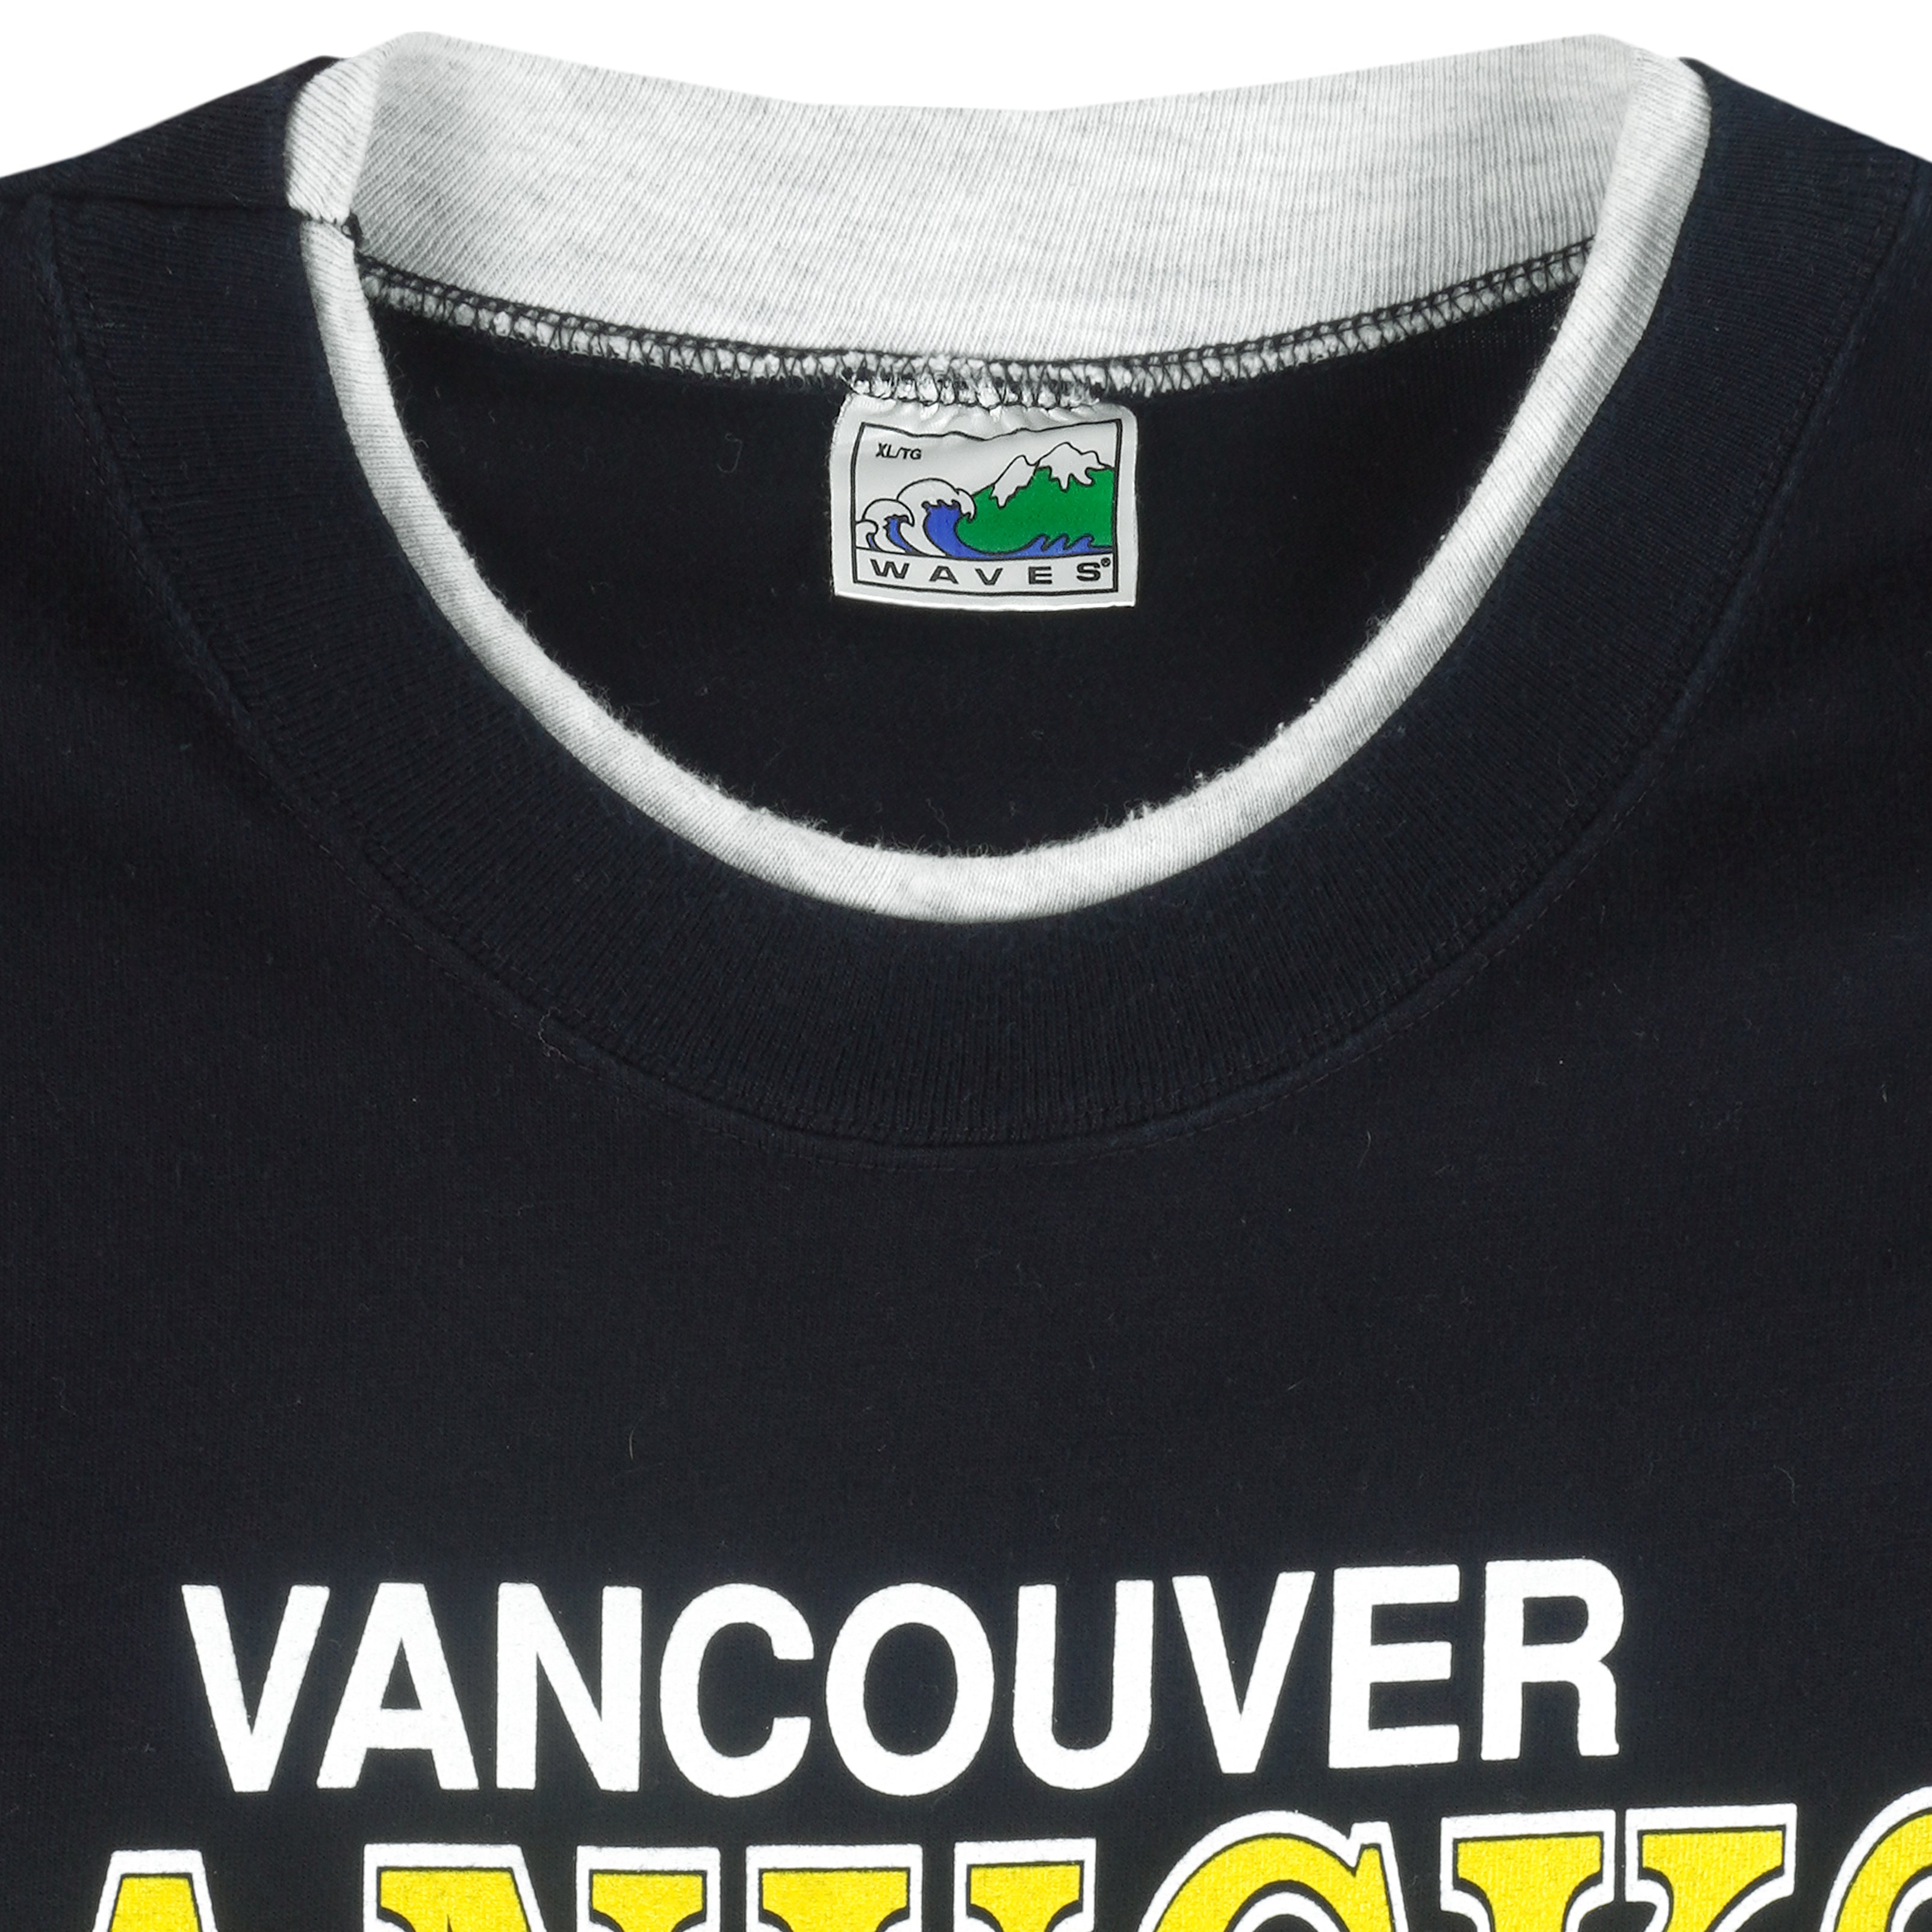 Vintage NHL Vancouver Canucks T Shirt